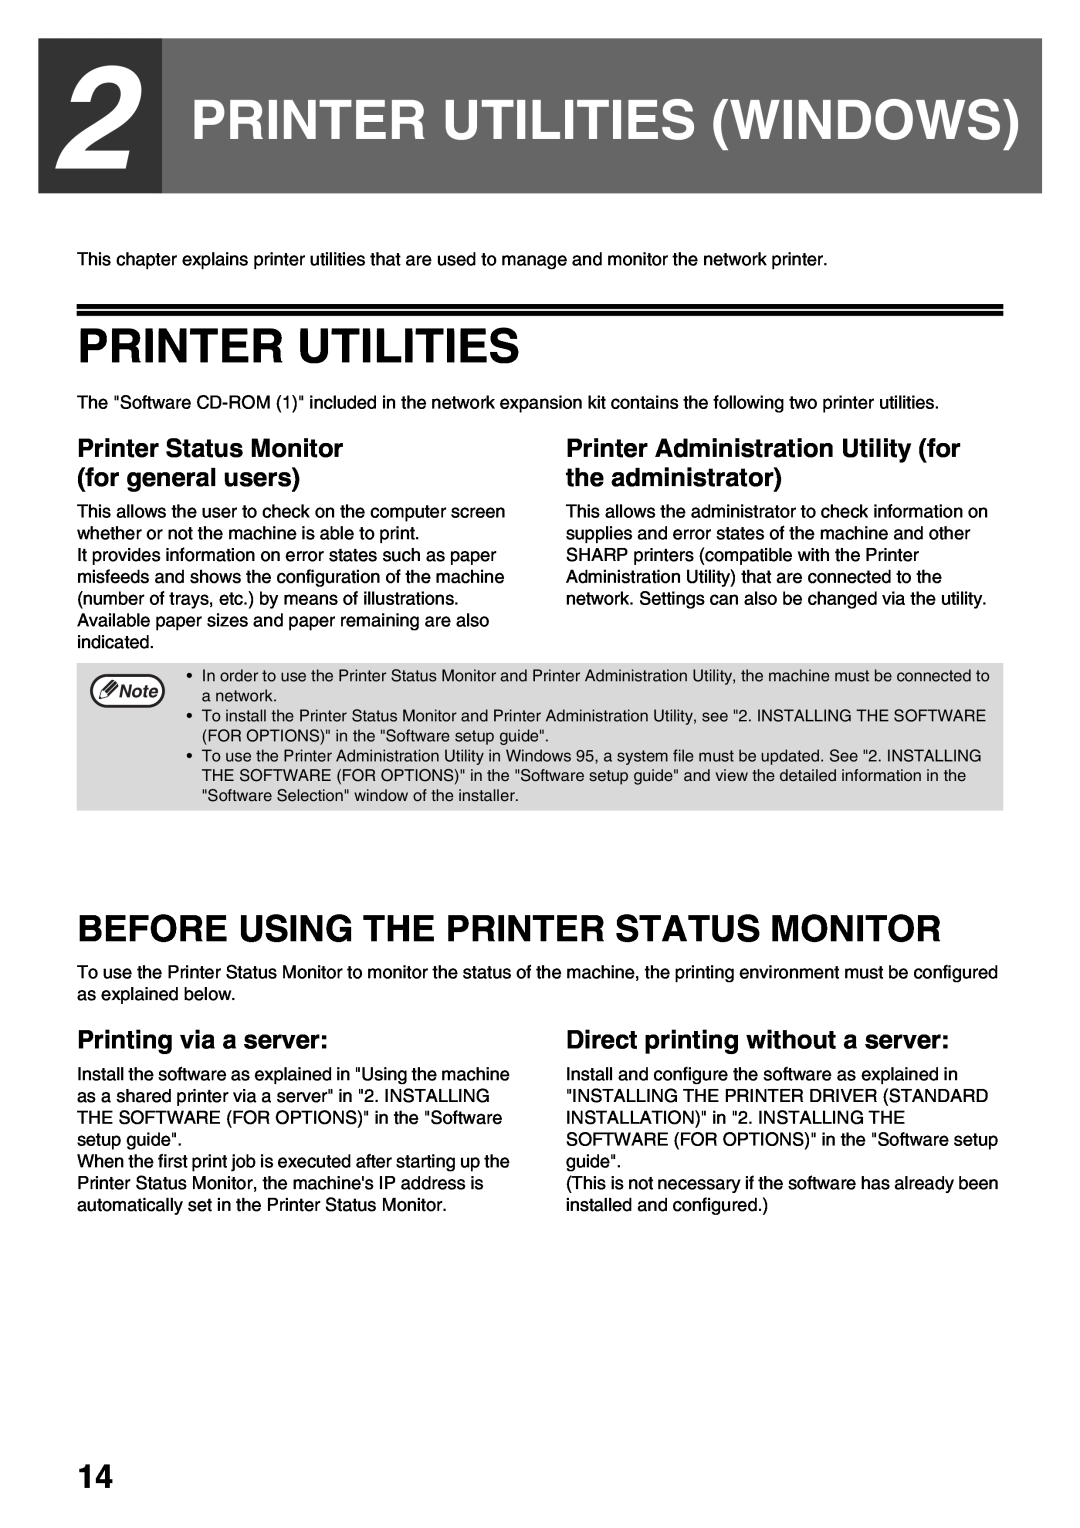 Sharp AR-NB3 operation manual Printer Utilities Windows, Before Using The Printer Status Monitor, Printing via a server 